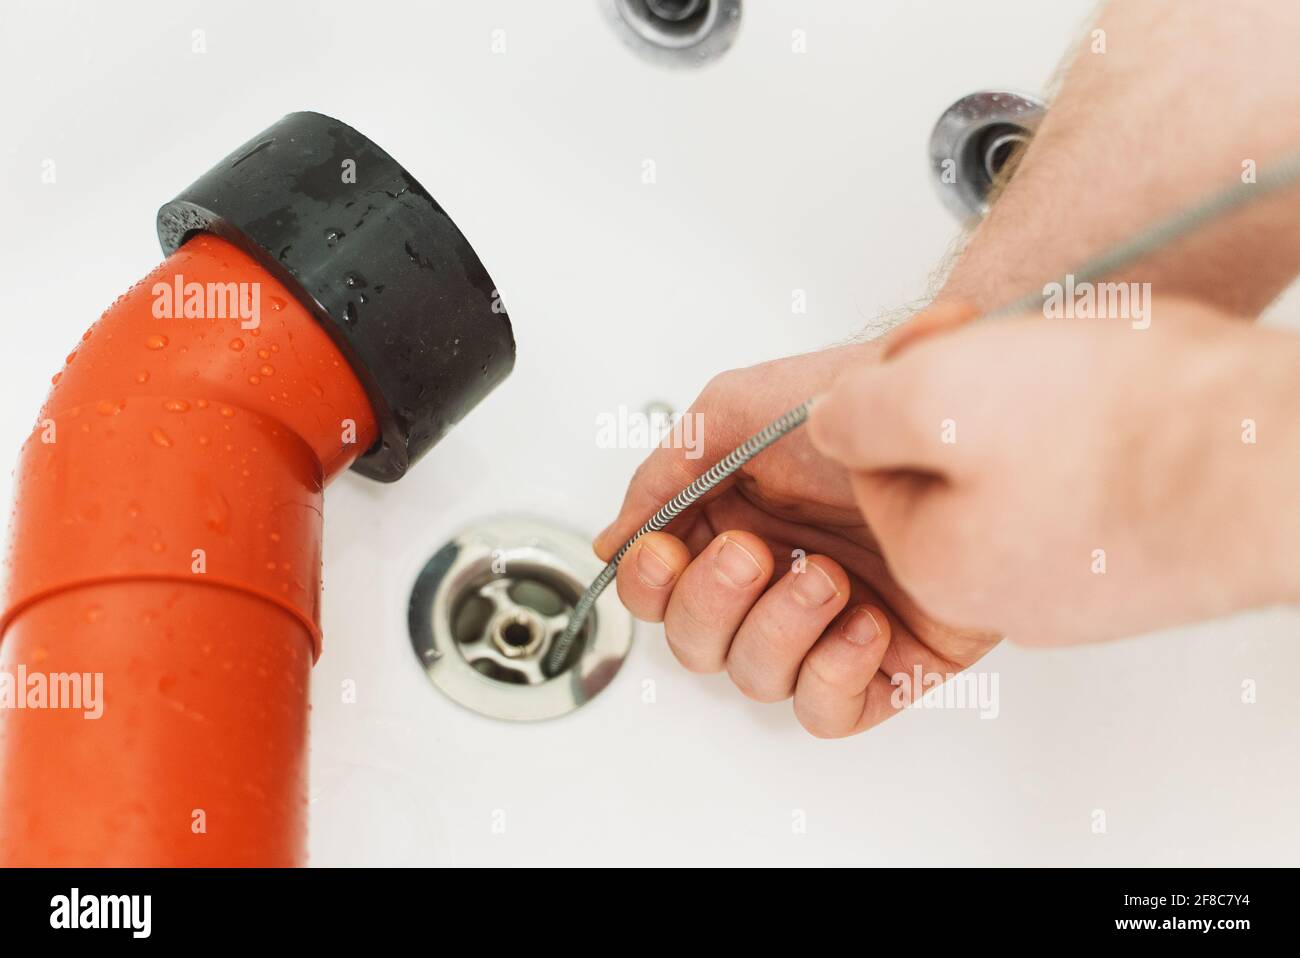 https://c8.alamy.com/comp/2F8C7Y4/plumber-using-drain-snake-to-unclog-bathtub-2F8C7Y4.jpg